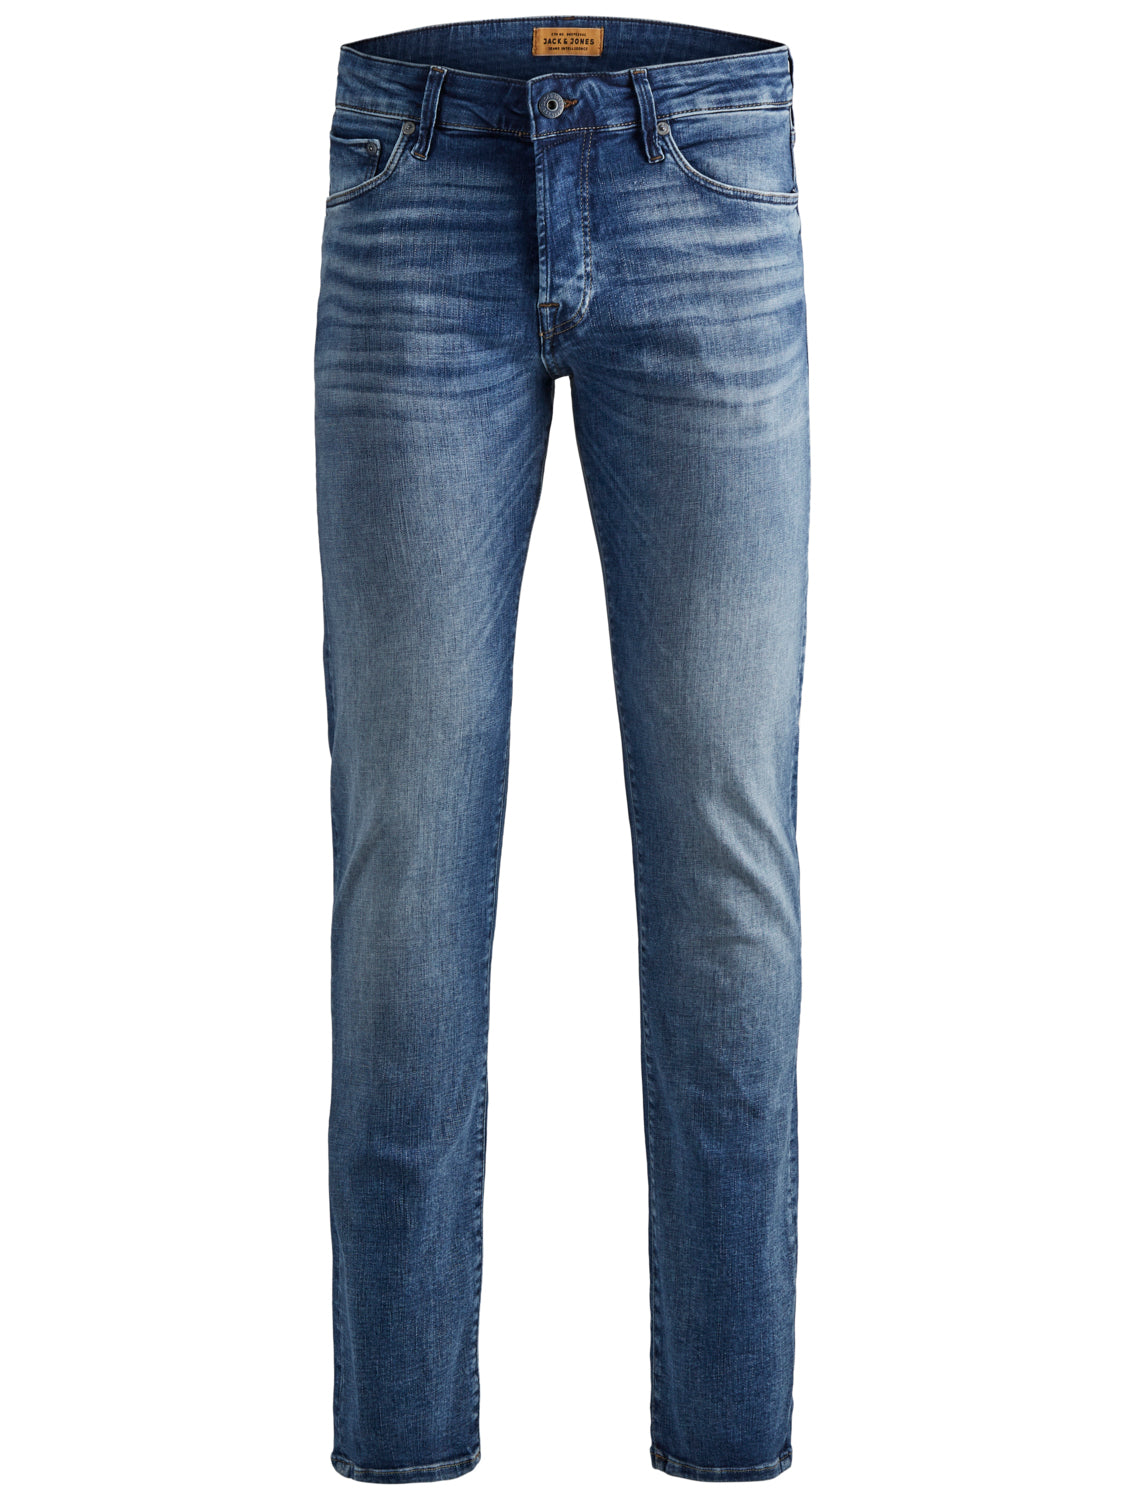 JJIGLENN Jeans - blue denim